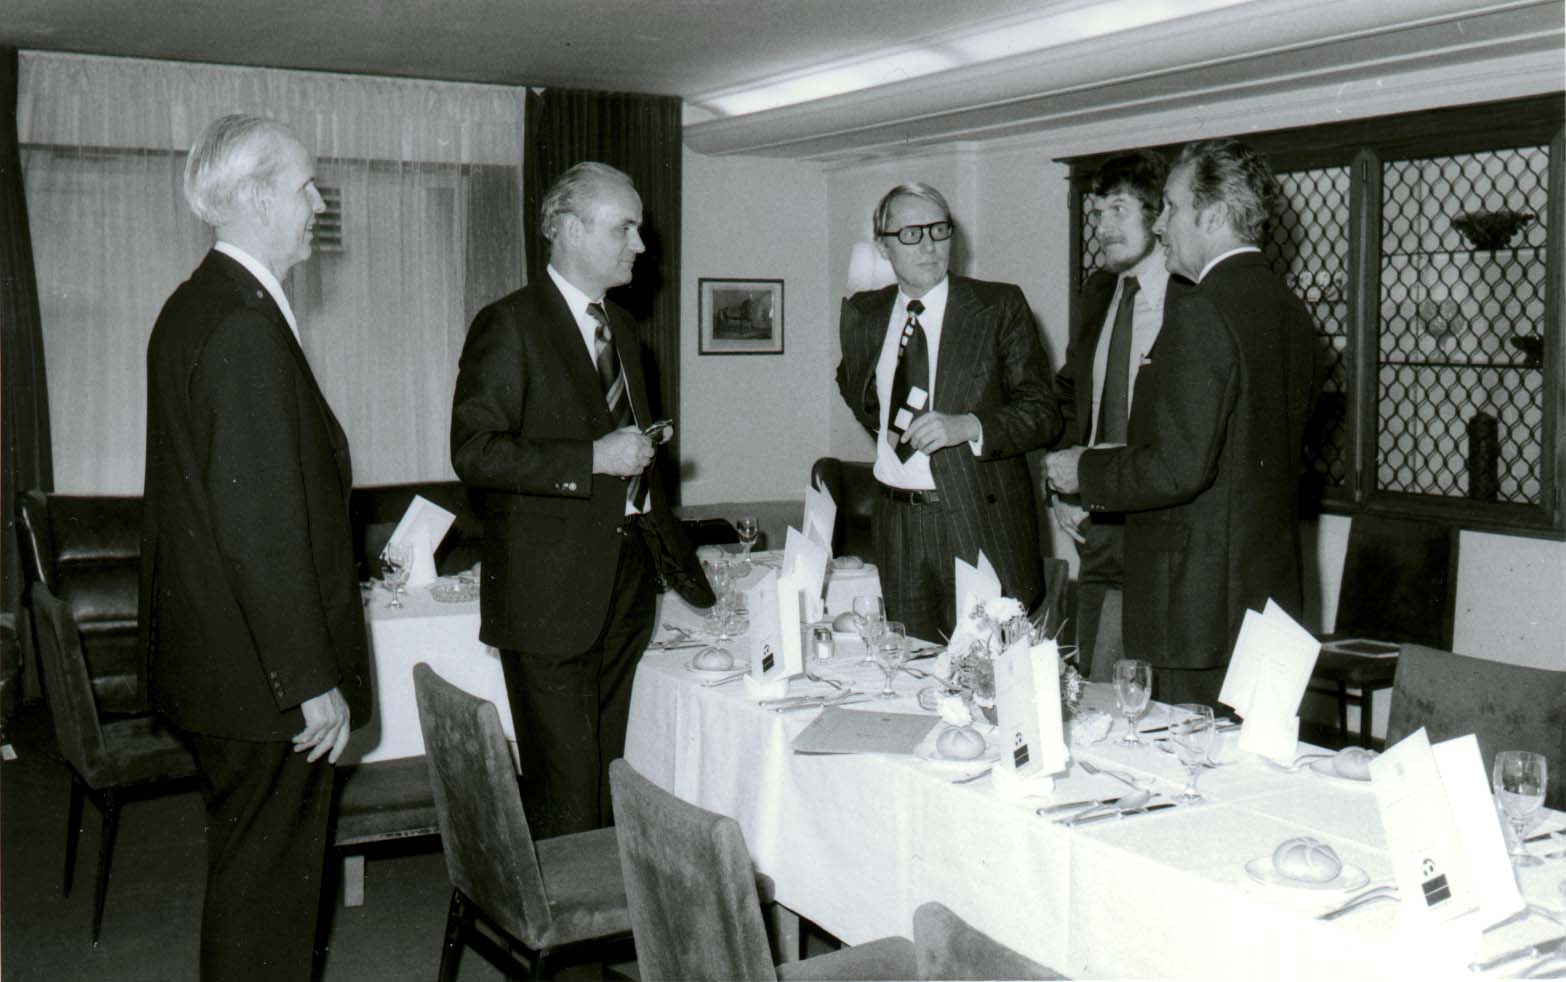 Fraunhofer Annual Meeting 1974: Outgoing Fraunhofer President Otto Mohr, Federal Research Minister Hans Matthöfer, Eberhard Schlephorst, NN, August Epp (from left to right)